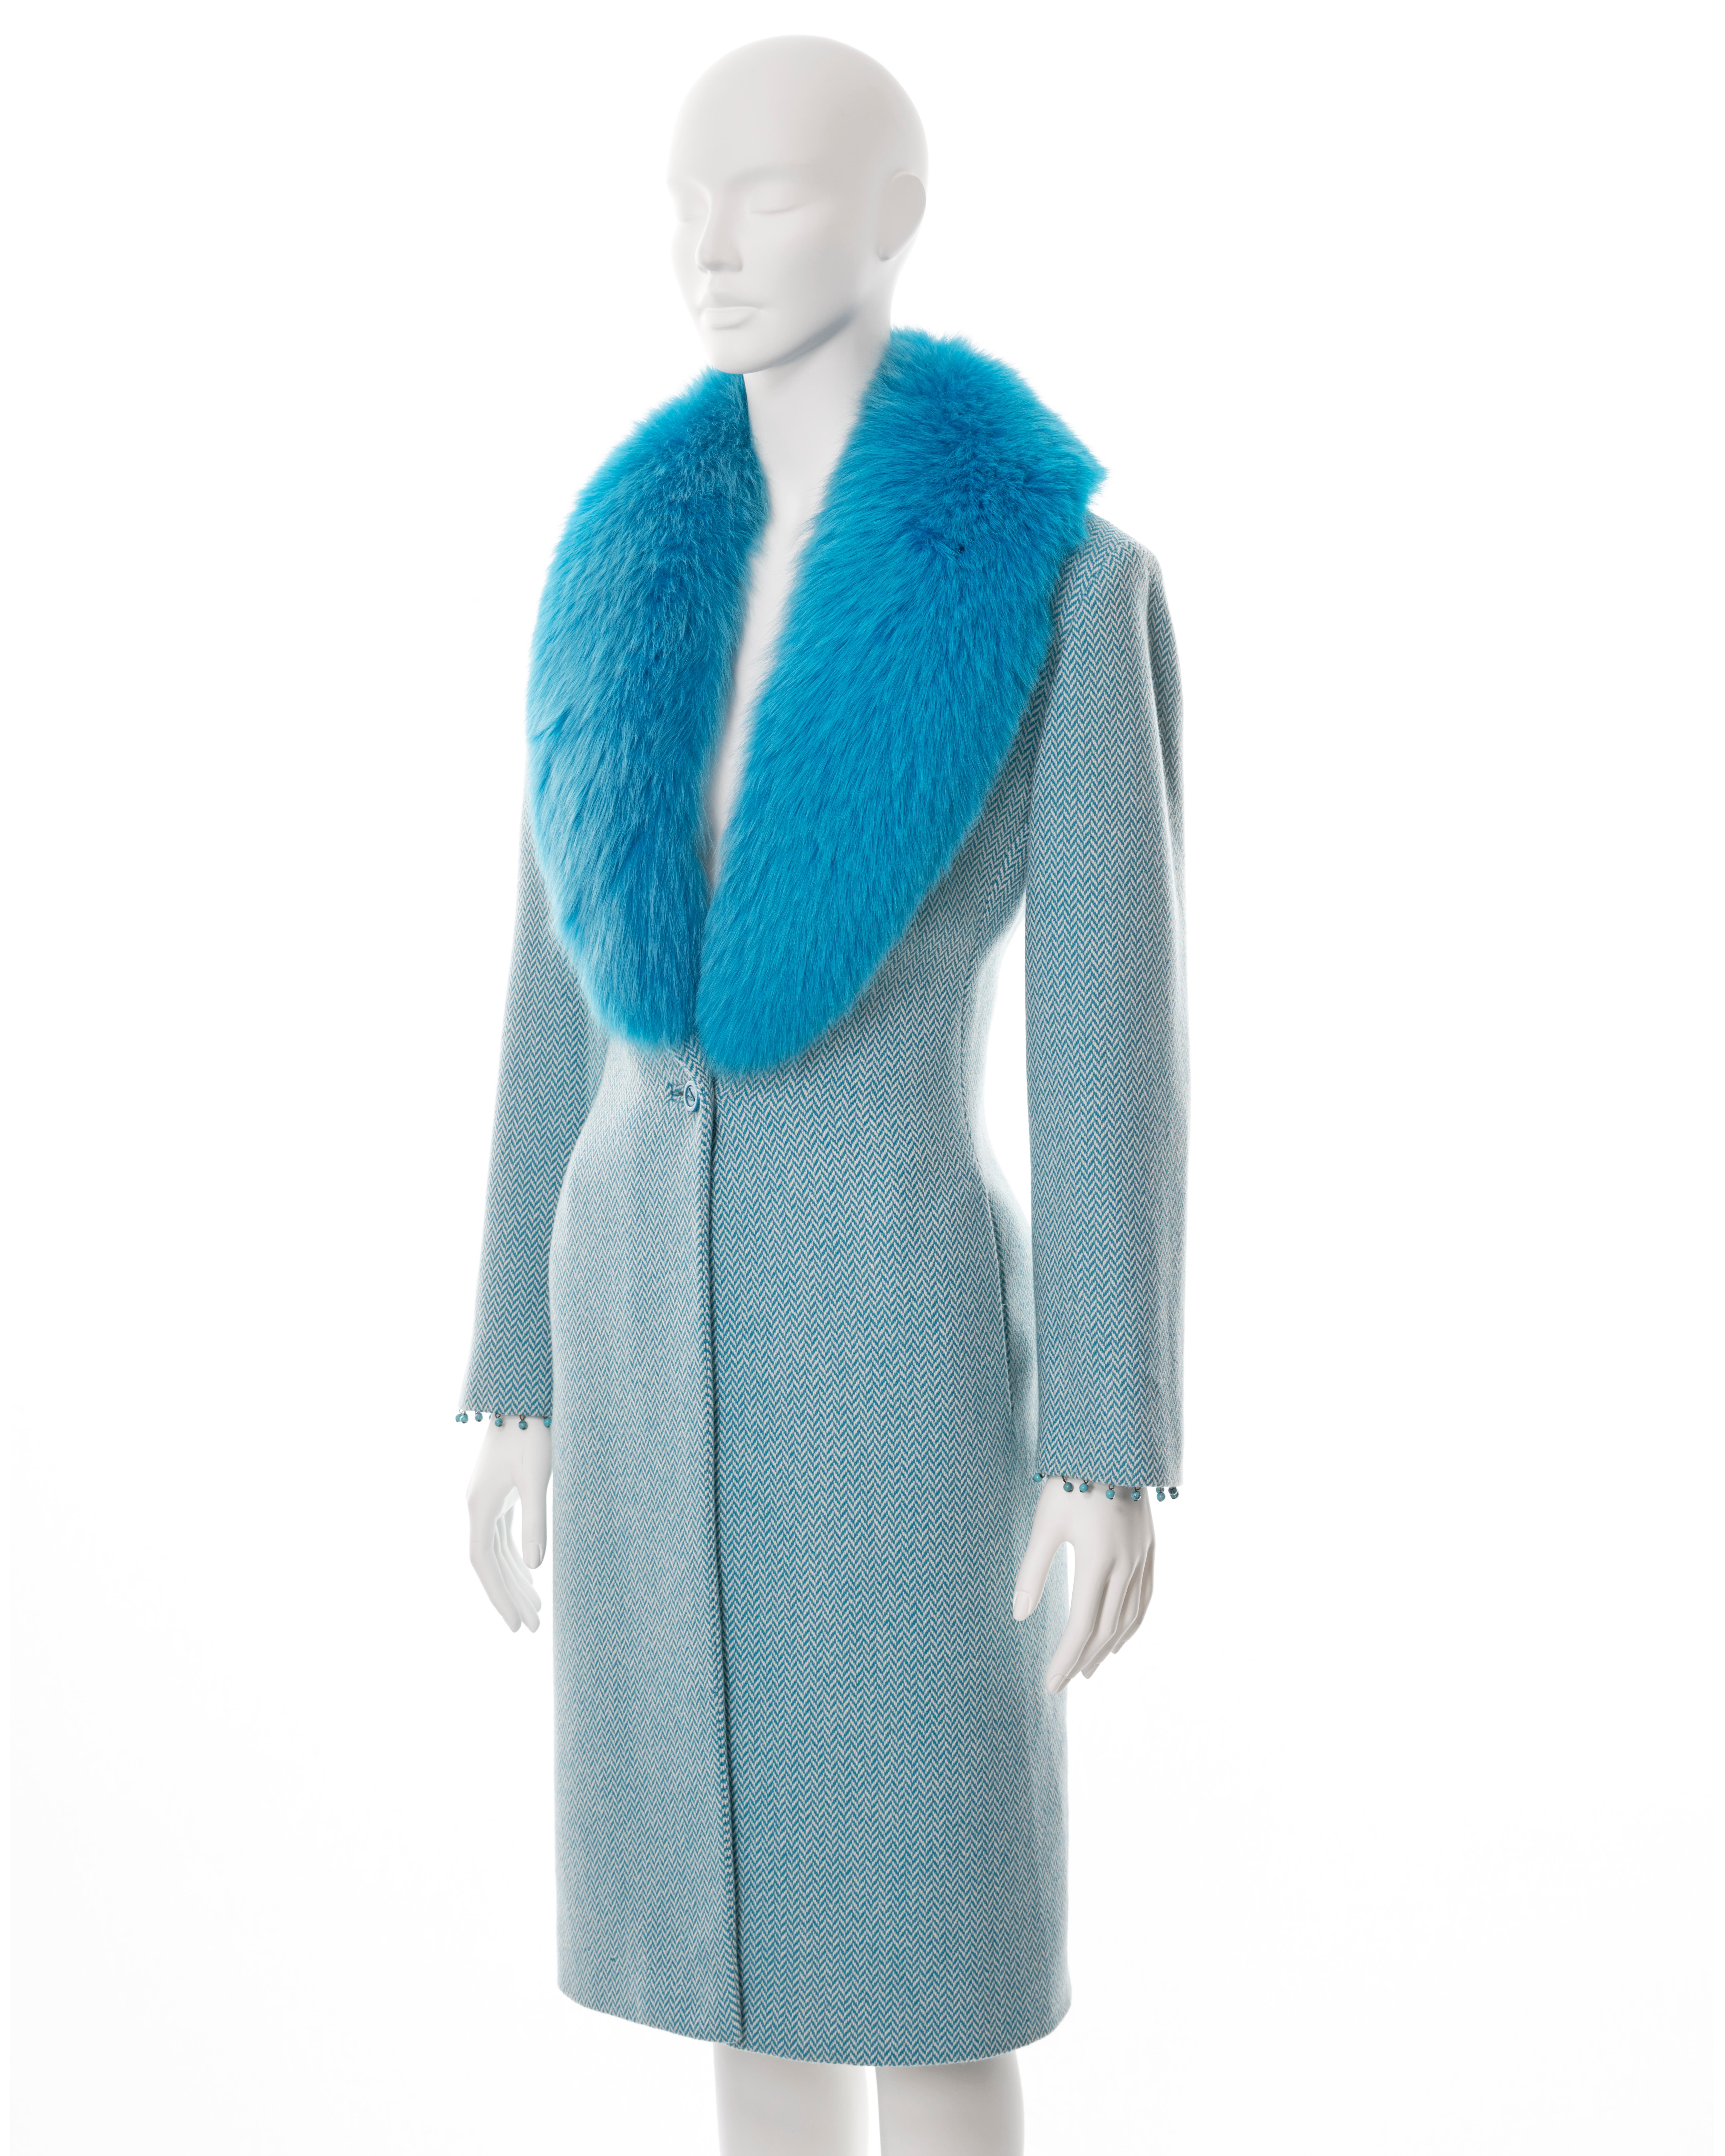 Gianni Versace herringbone tweed coat with blue fox fur collar, fw 1999 For Sale 1